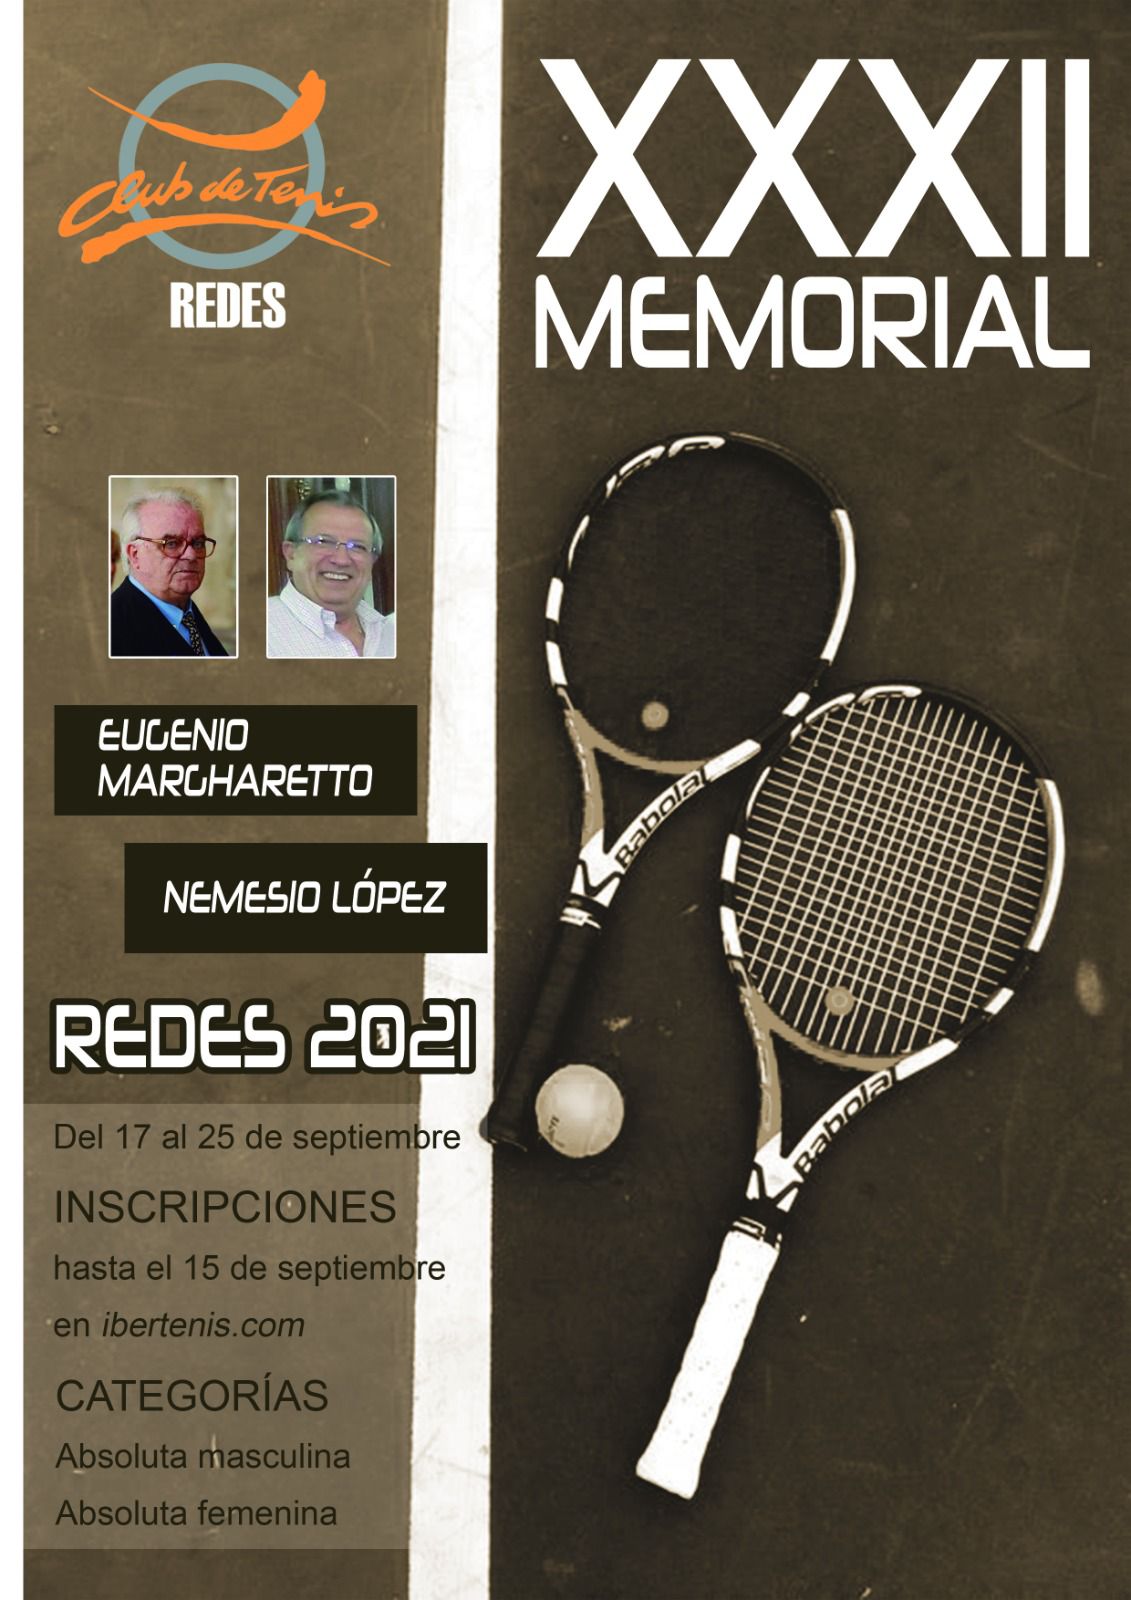 Cartel del XXXII MEMORIAL EUGENIO MARGHARETTO / NEMESIO LÓPEZ - CLUB DE TENIS REDES